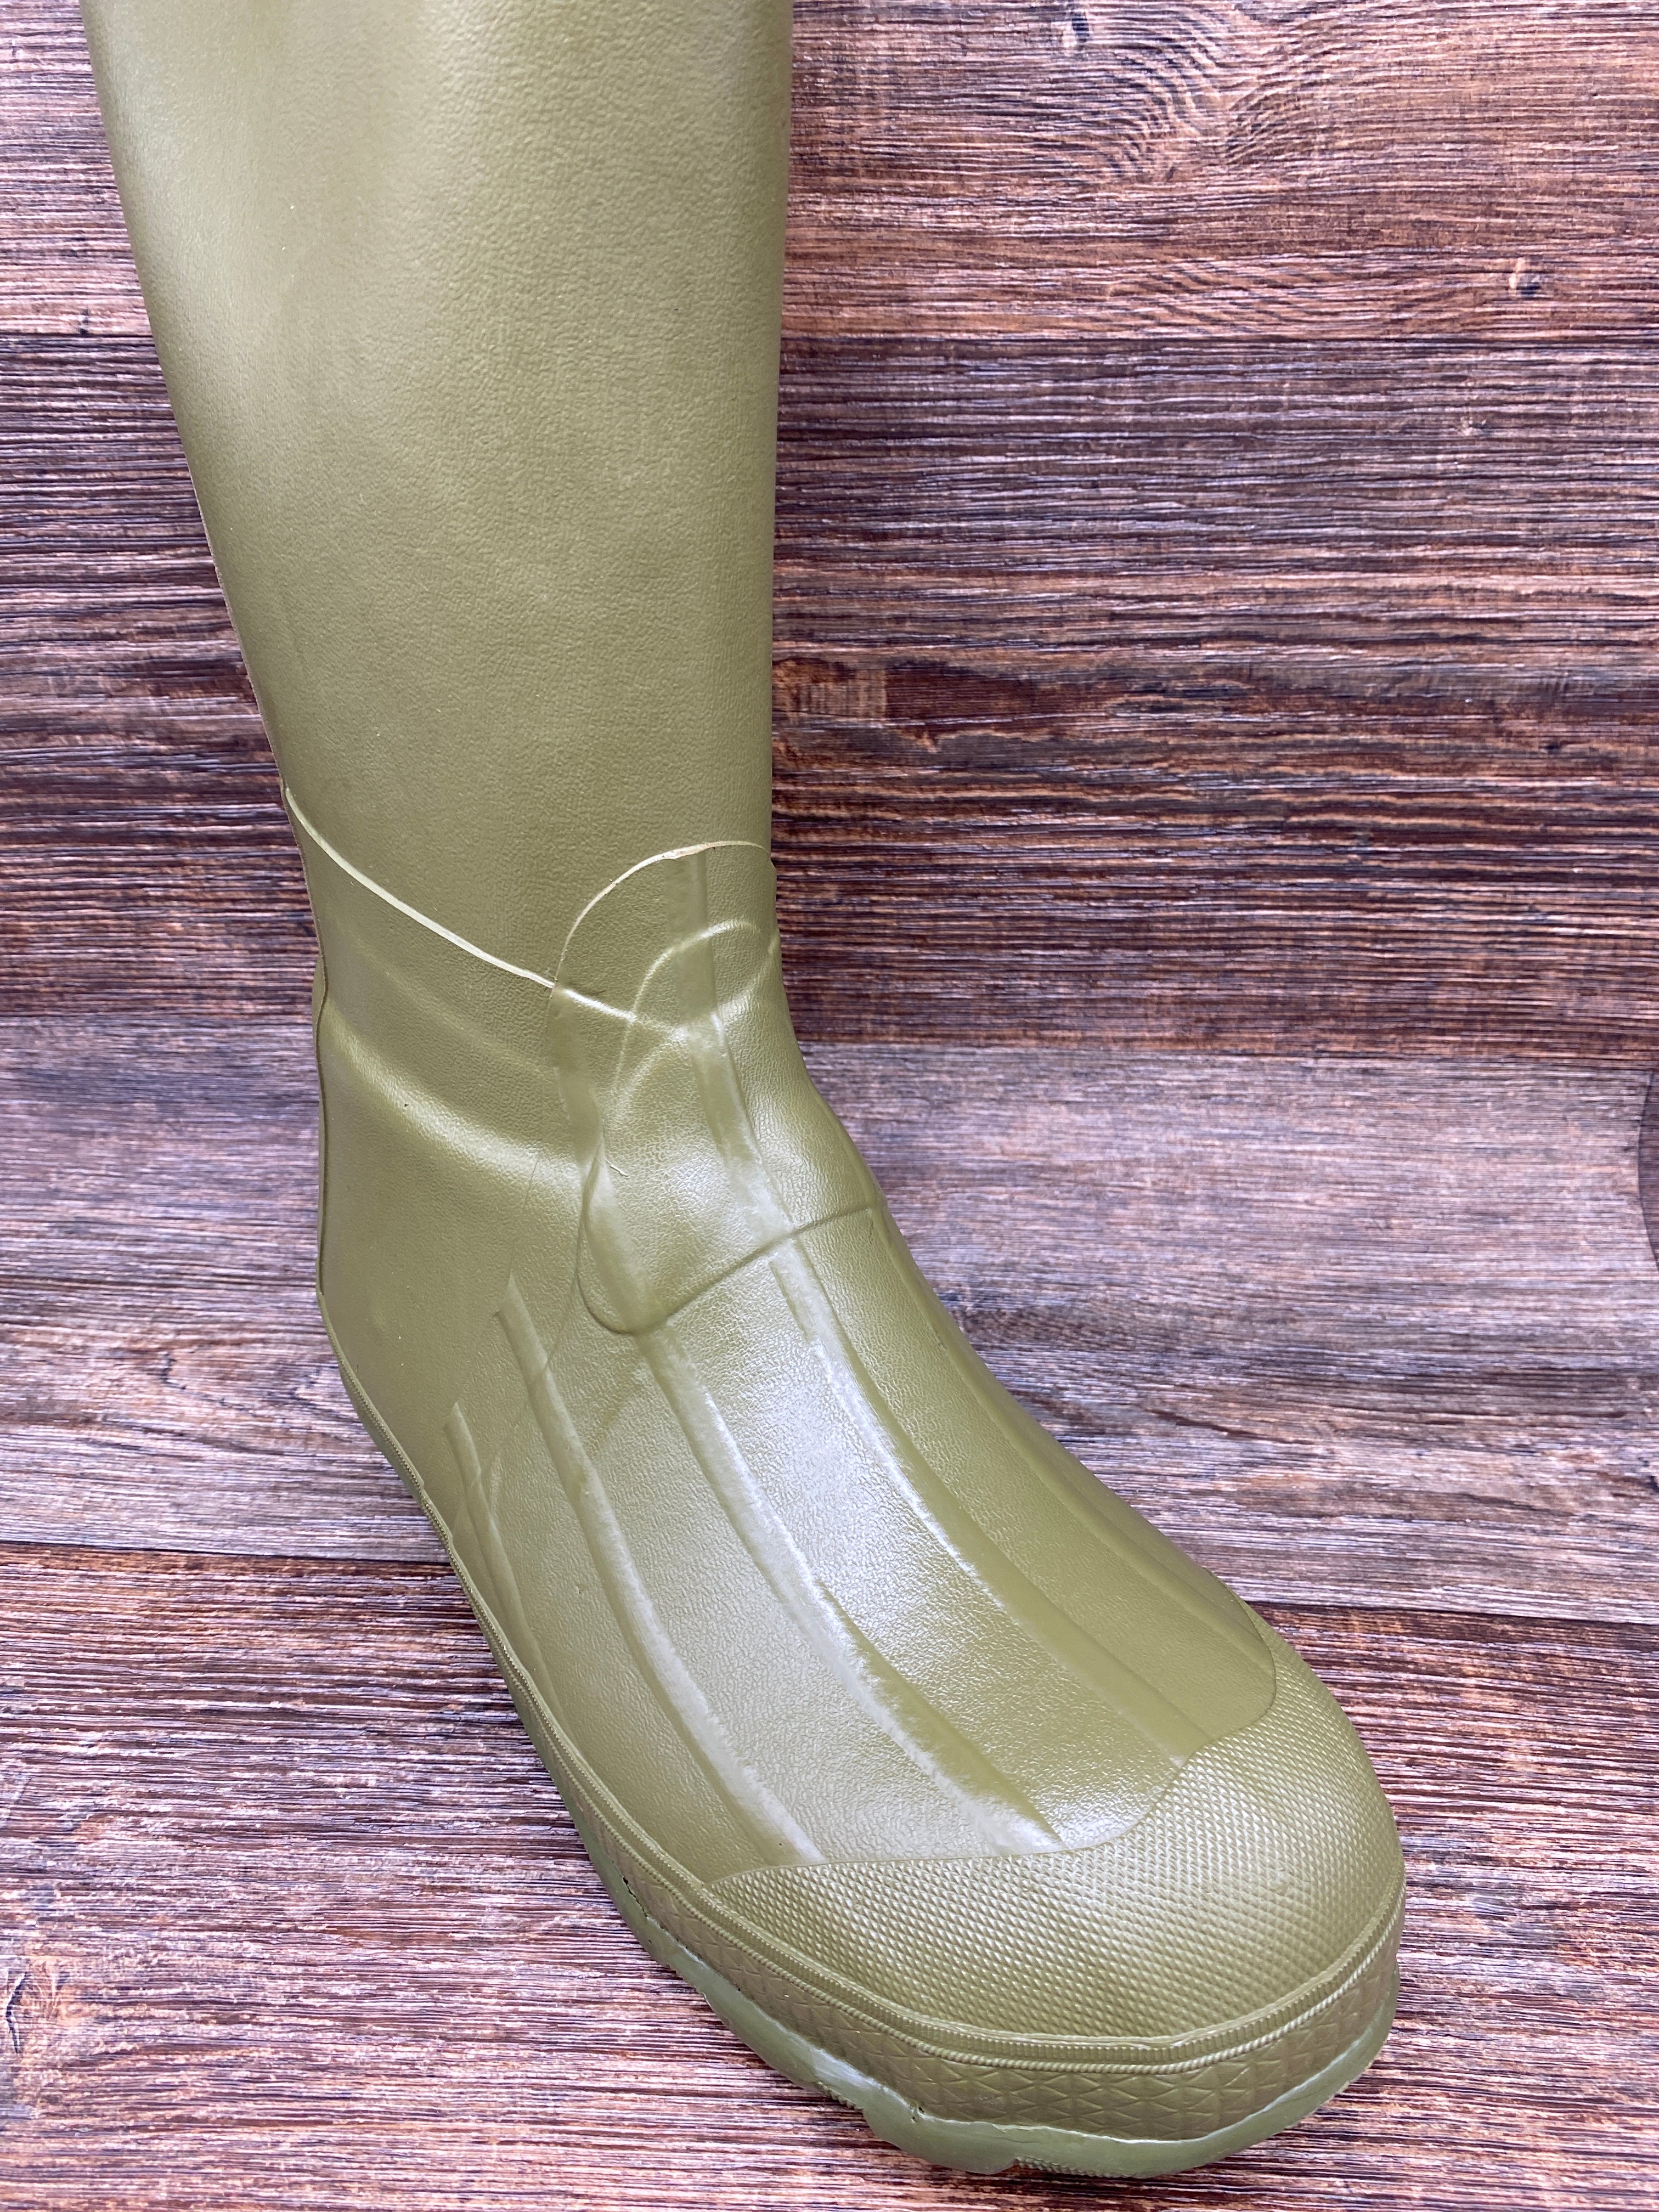 NINGO Men's Steel Toe Rain Boots, Waterproof Rubber